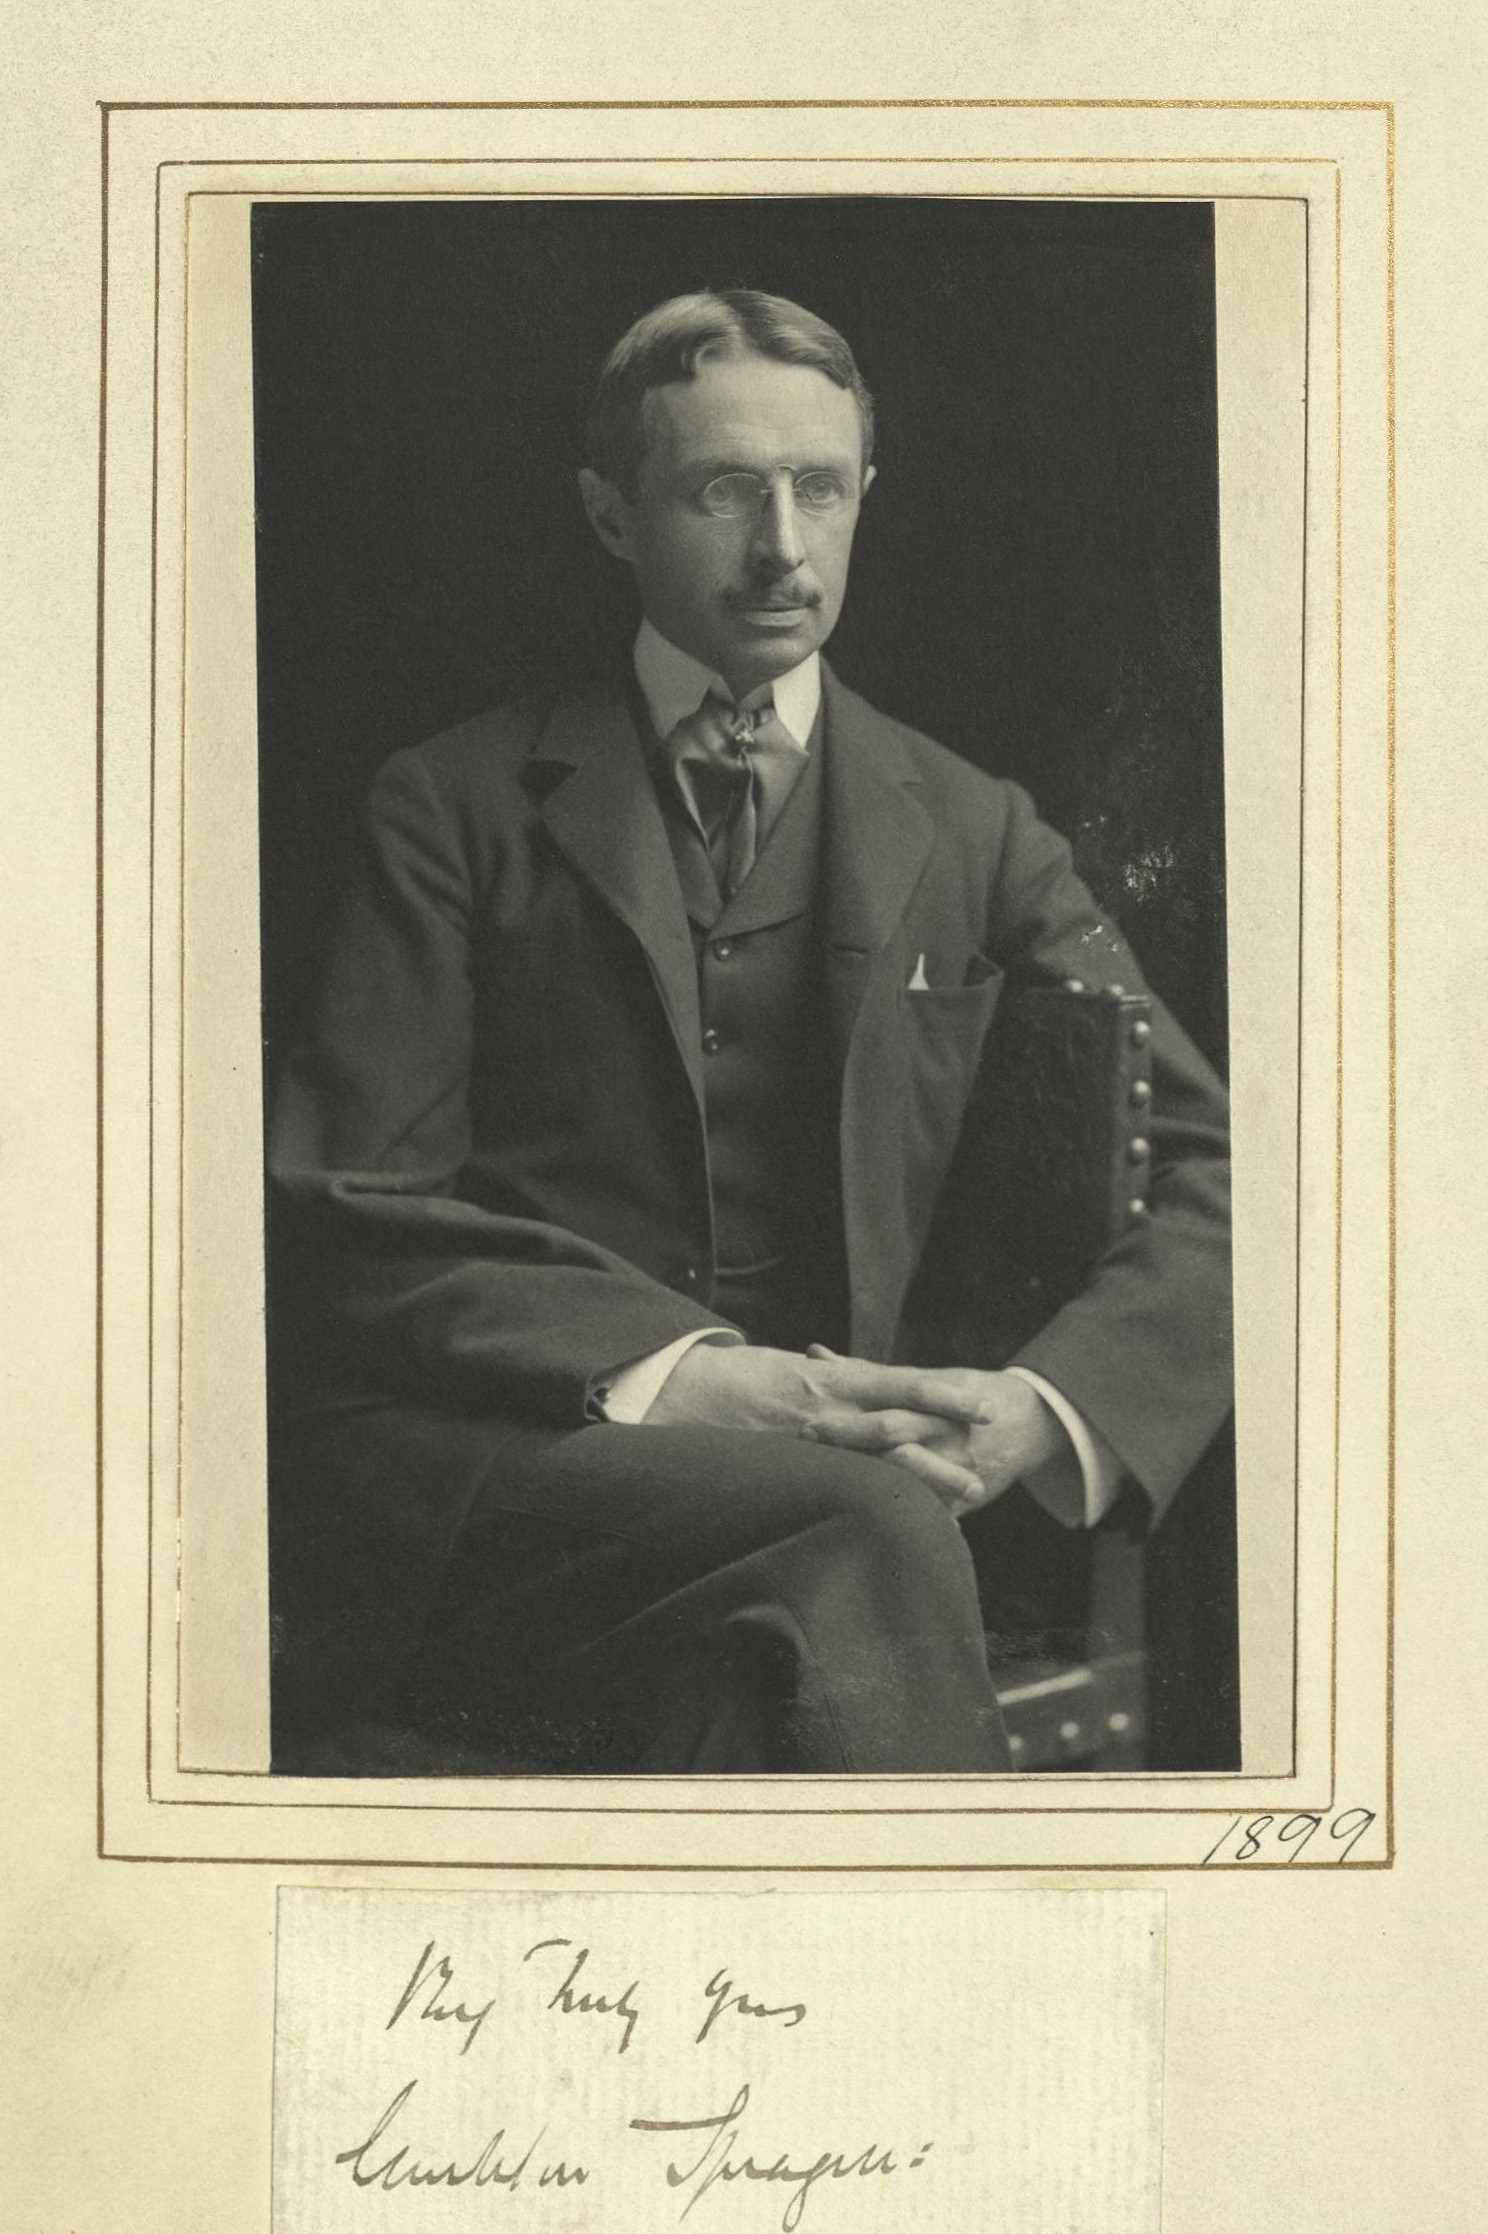 Member portrait of Carleton Sprague